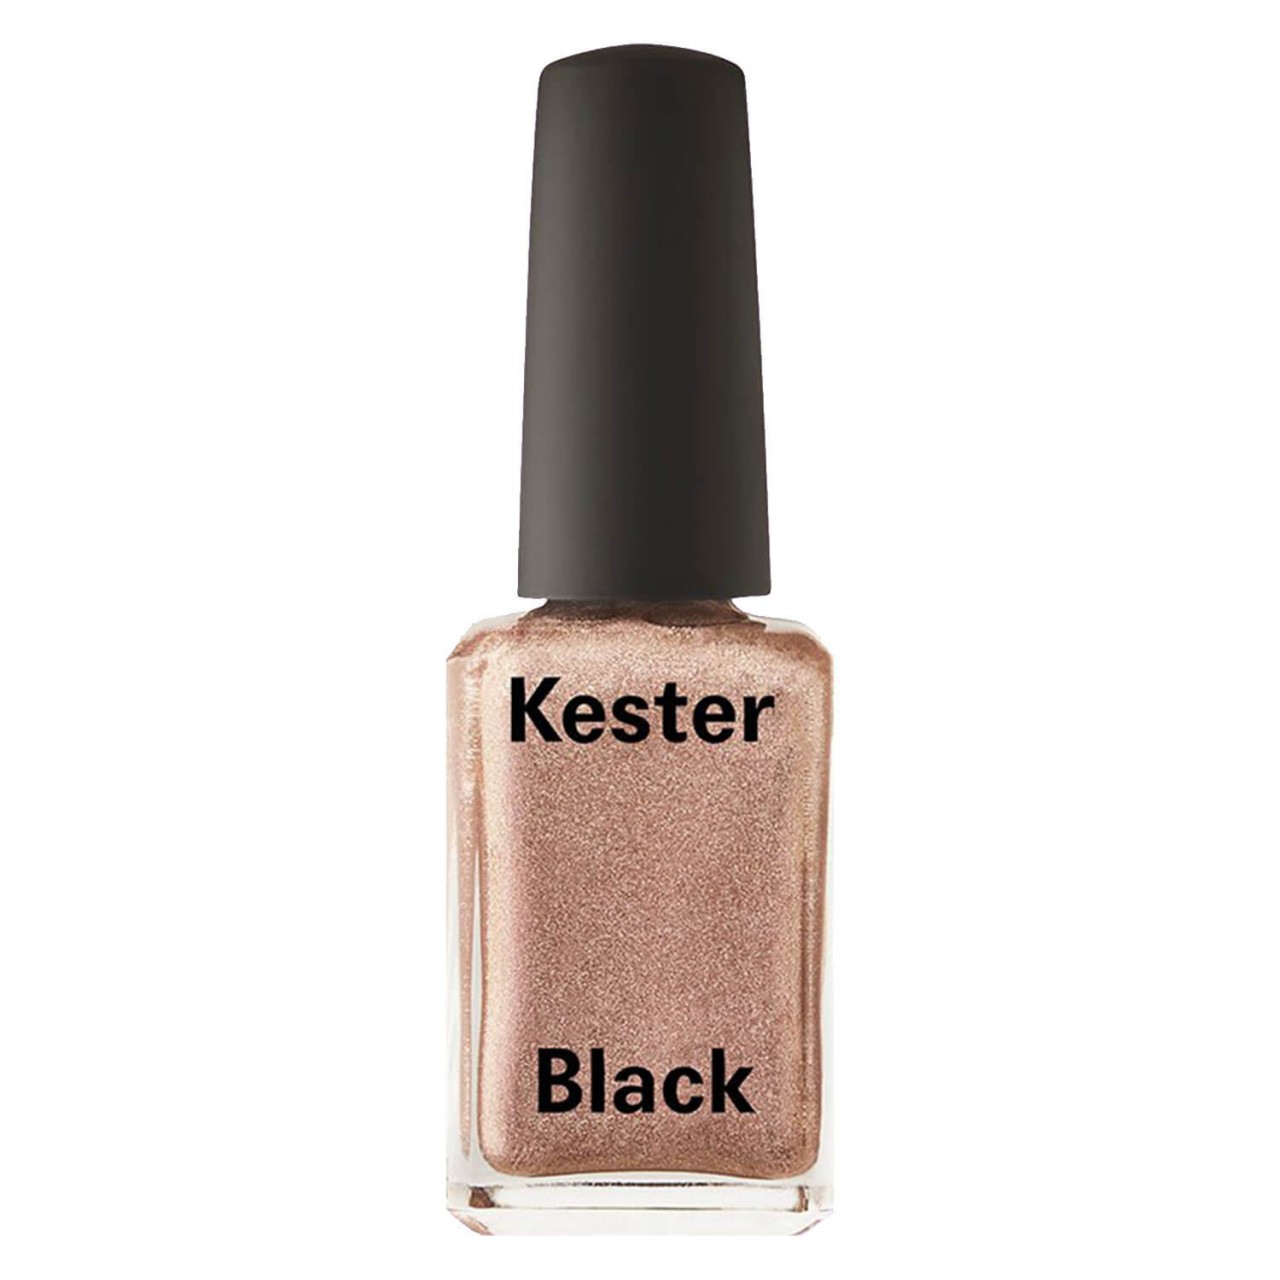 KB Colours - Champagne von Kester Black